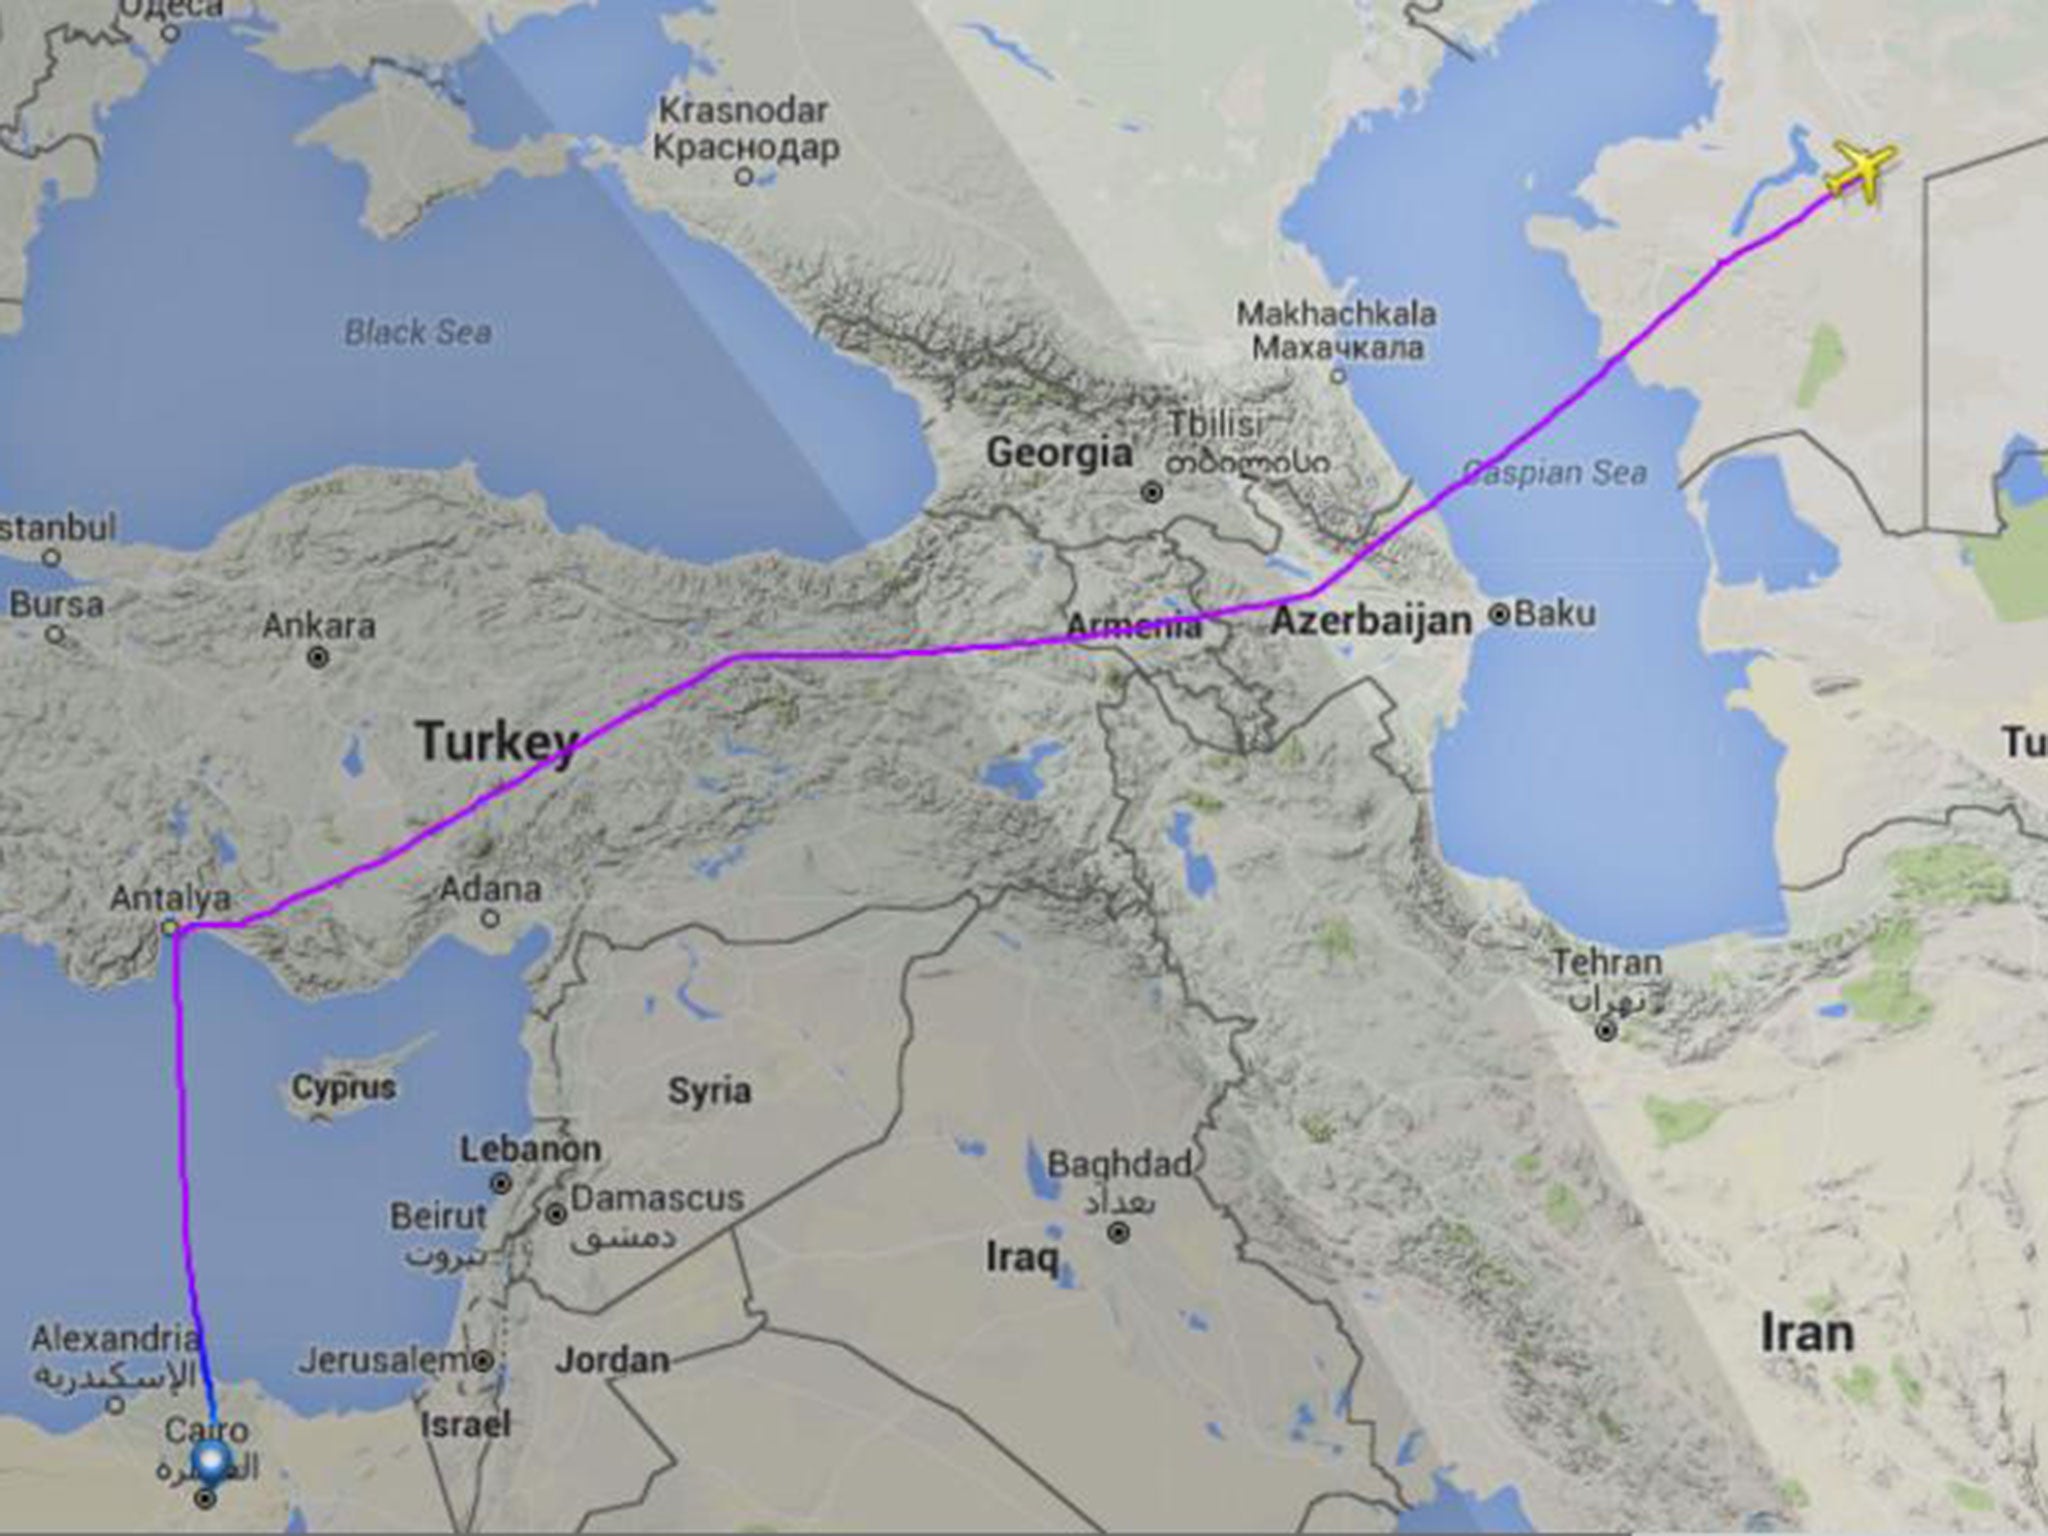 EgyptAir flight 955's flight path on 8 June 2016 before it made an emergency landing in Uzbekistan